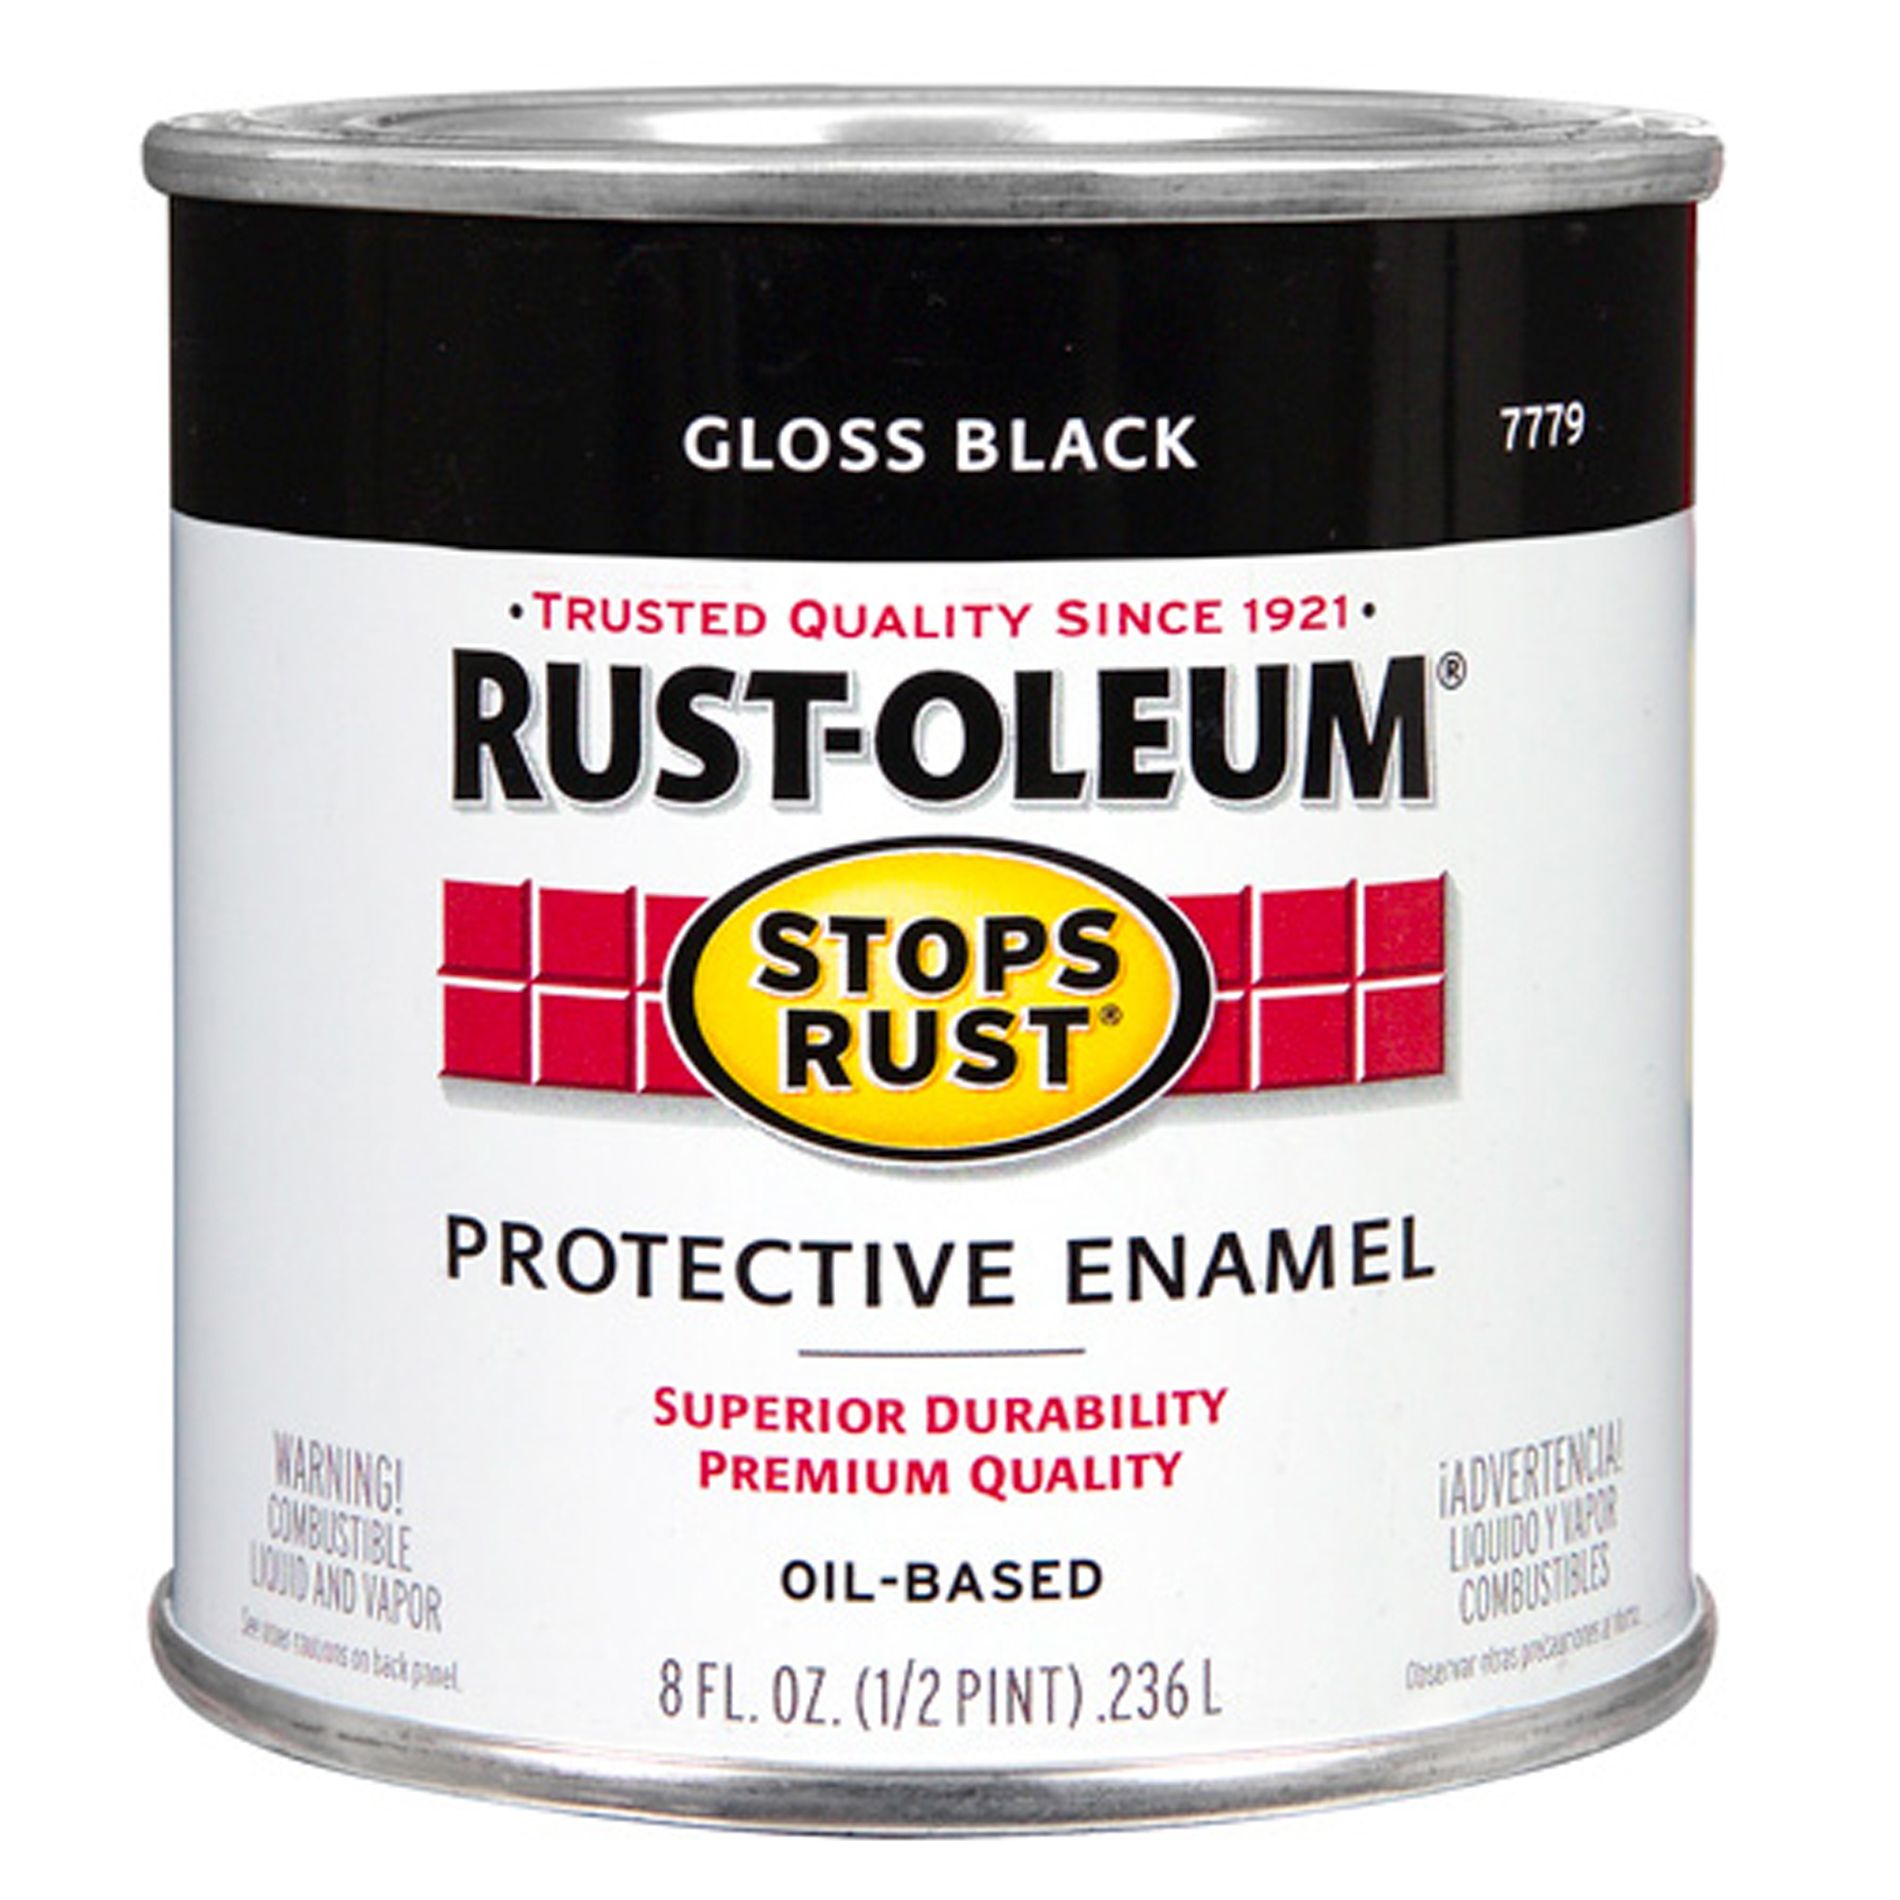 Rust-Oleum Stops Rust Gloss Black 1/2 Pint - 7779730